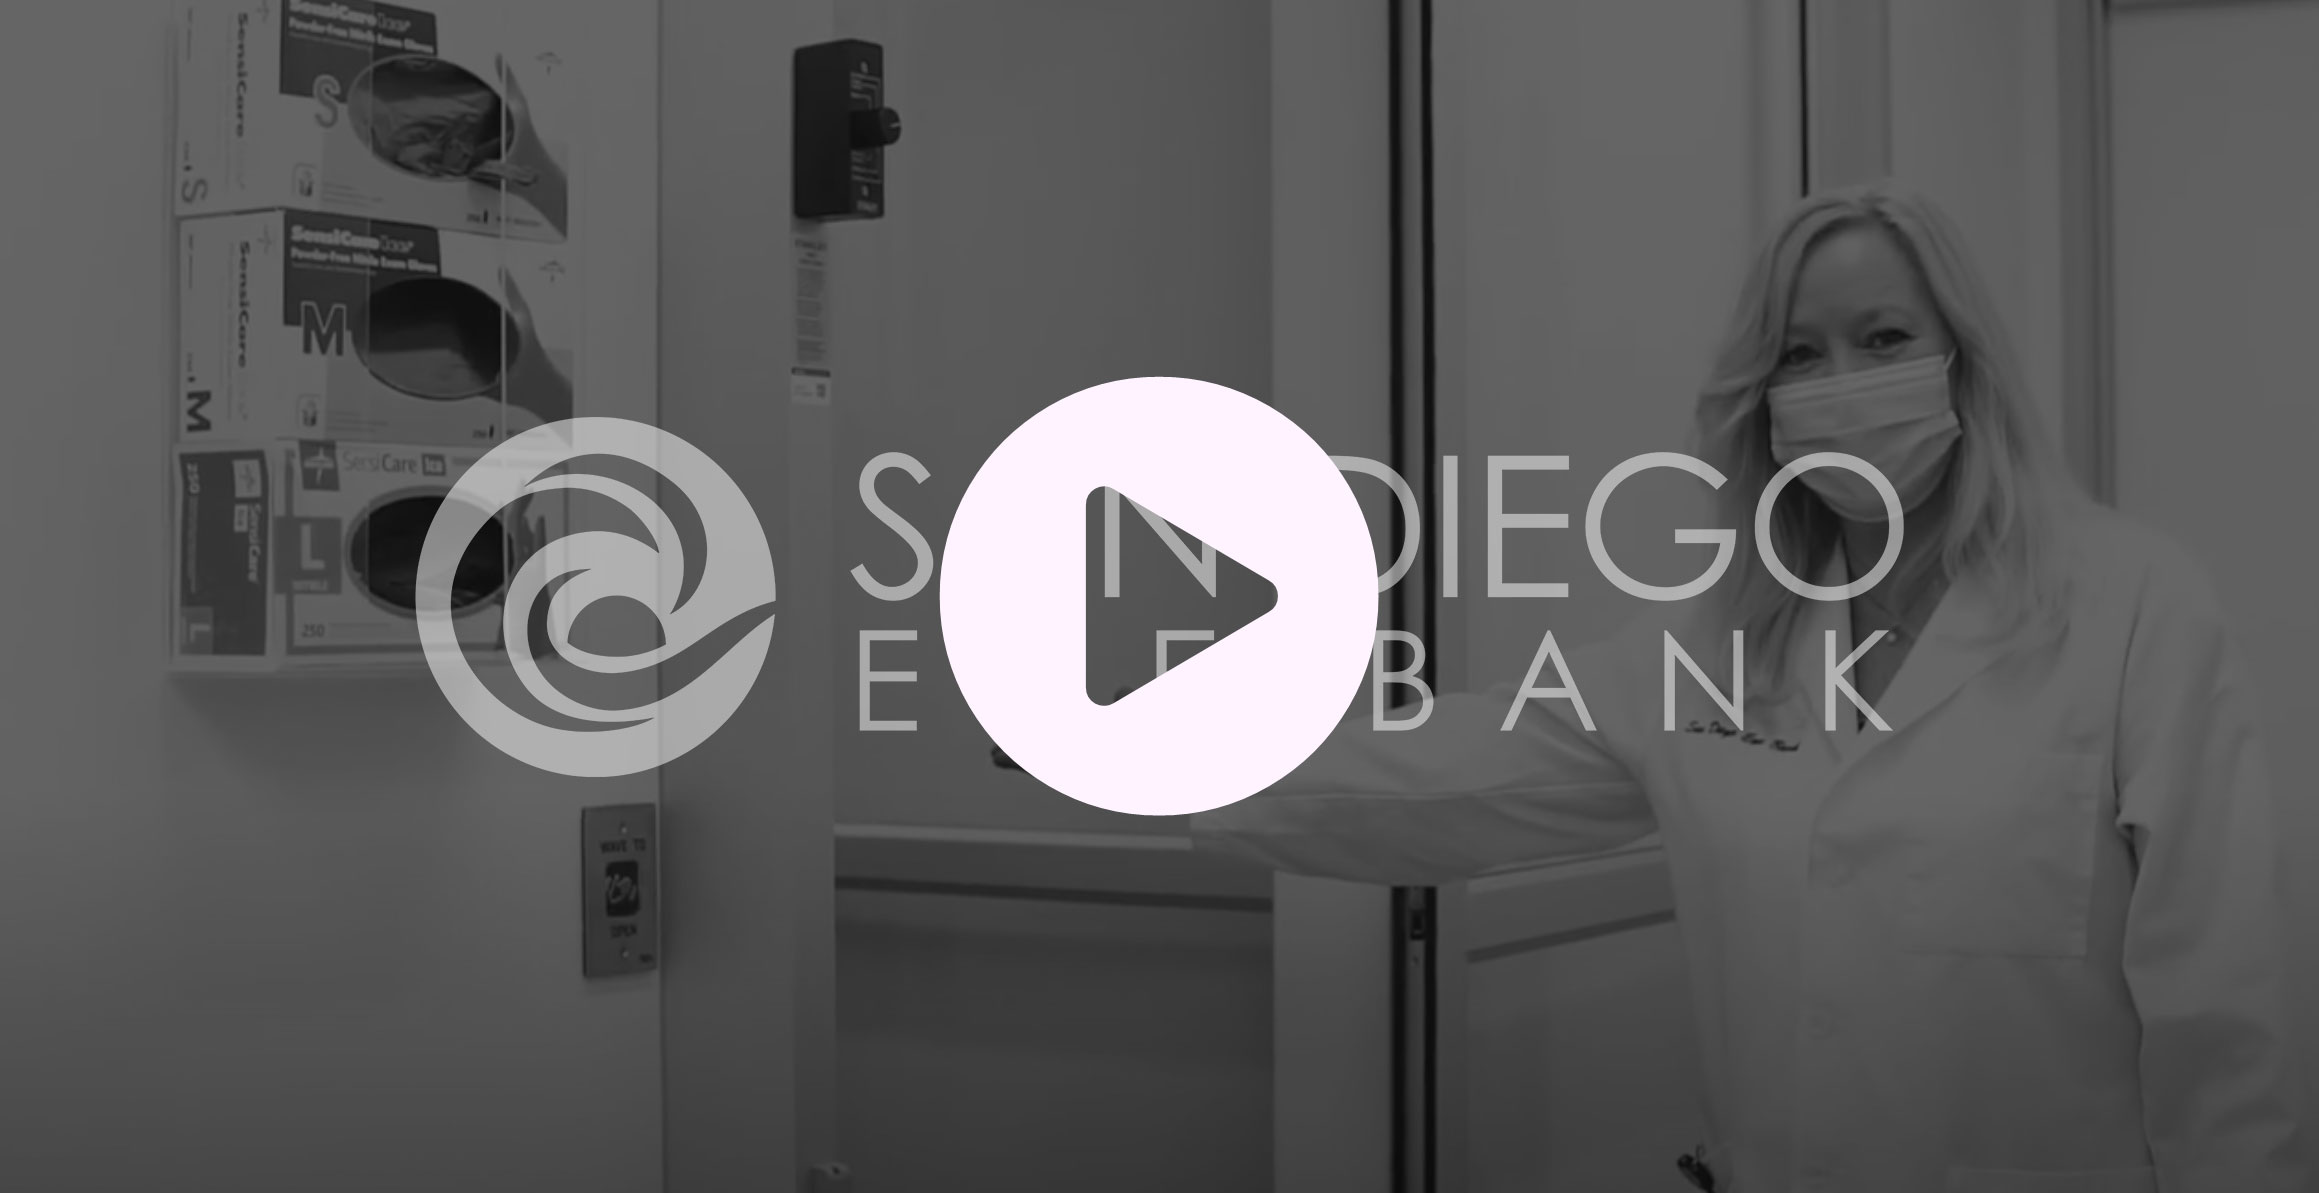 San Diego Eye Bank - Play Video